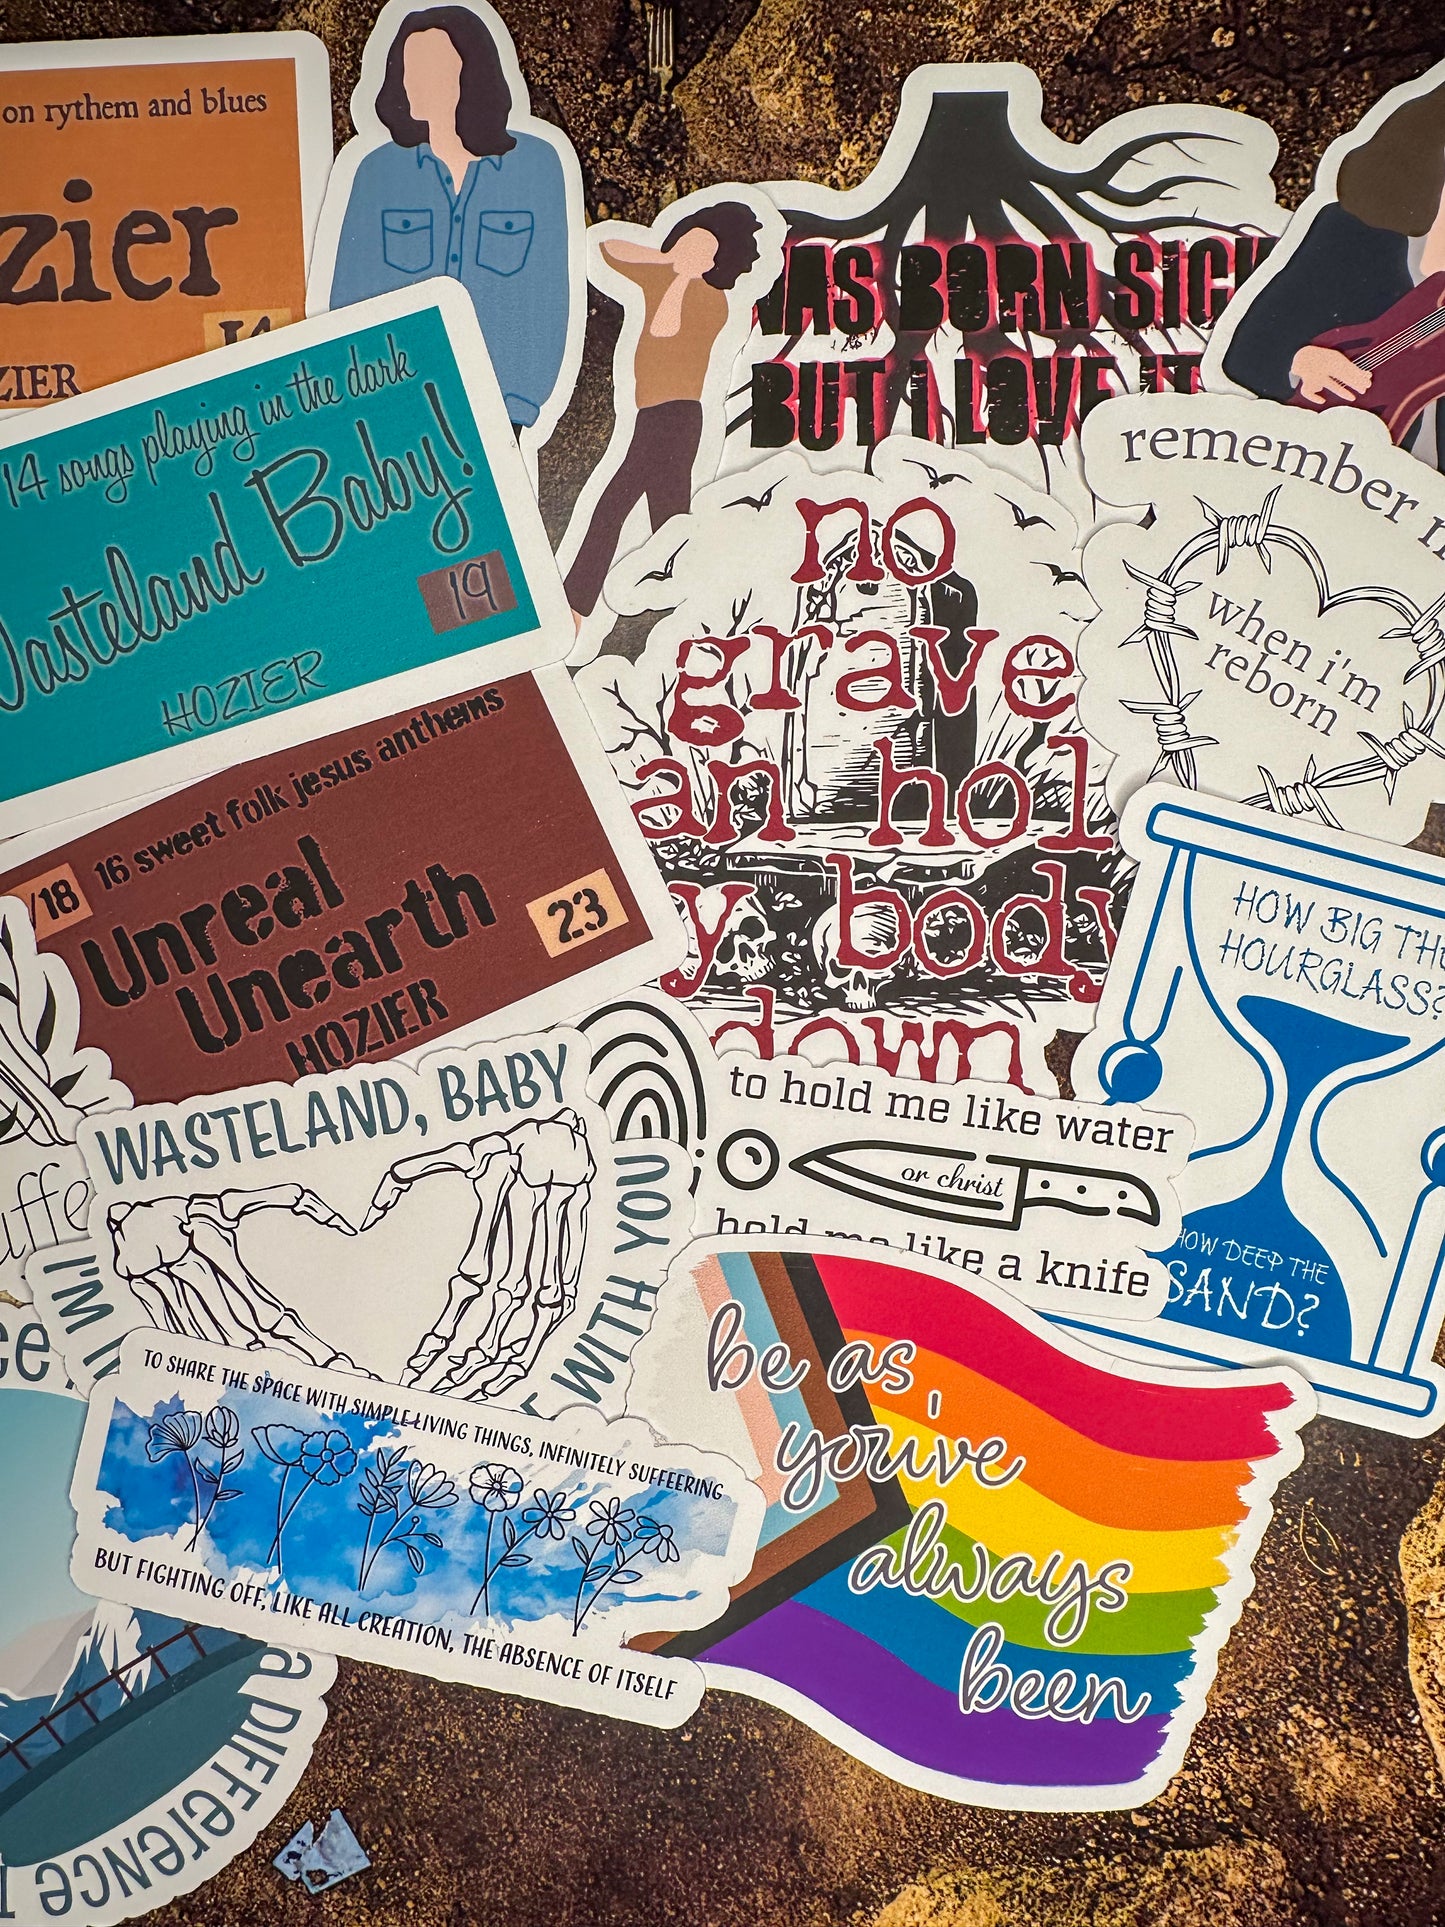 19 Hozier Stickers | Unreal Unearth Wasteland Baby Irish Folk Matte Finish